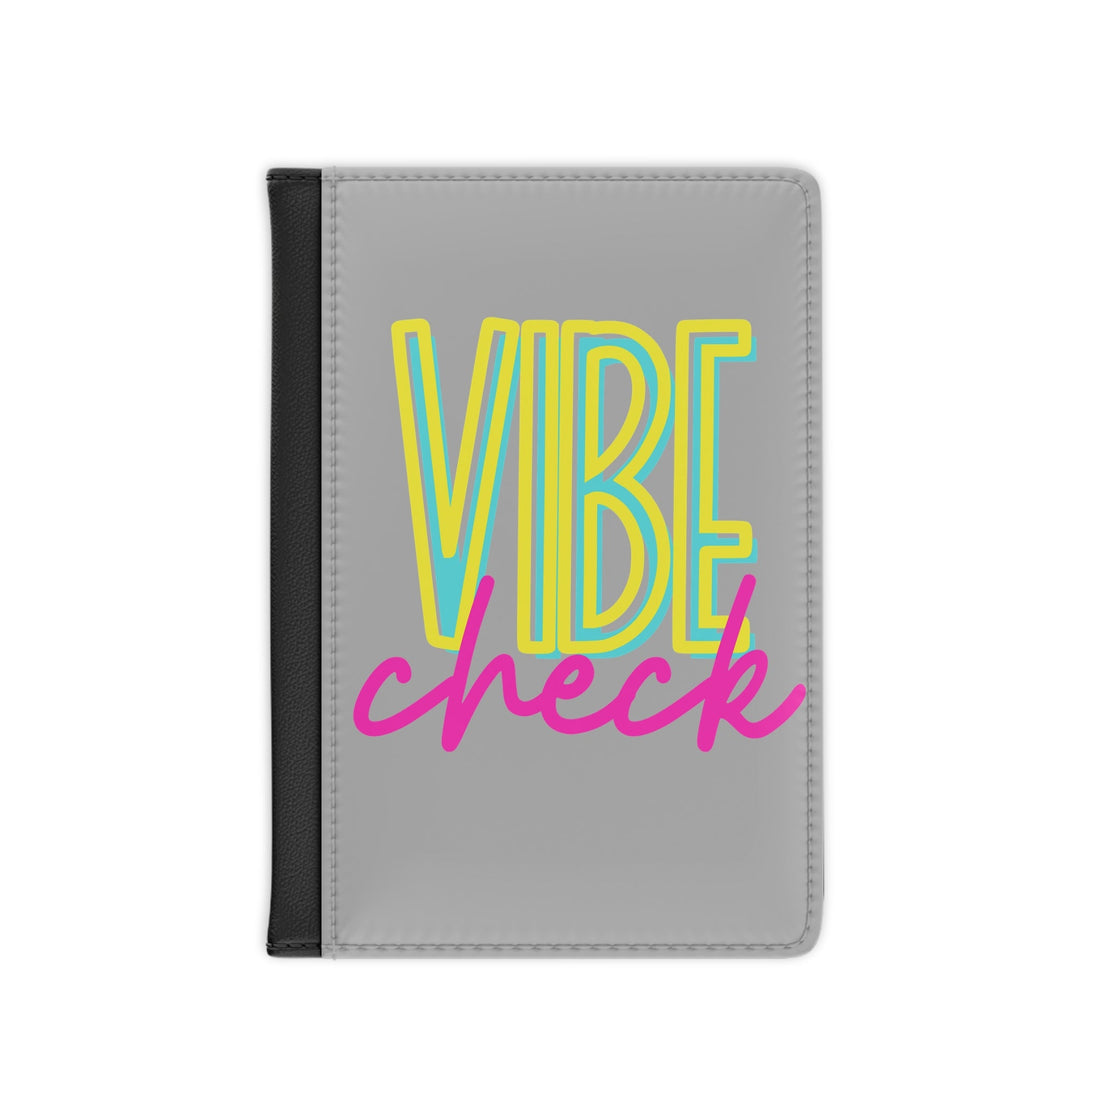 Vibe Check Passport Cover - Accessories - Positively Sassy - Vibe Check Passport Cover